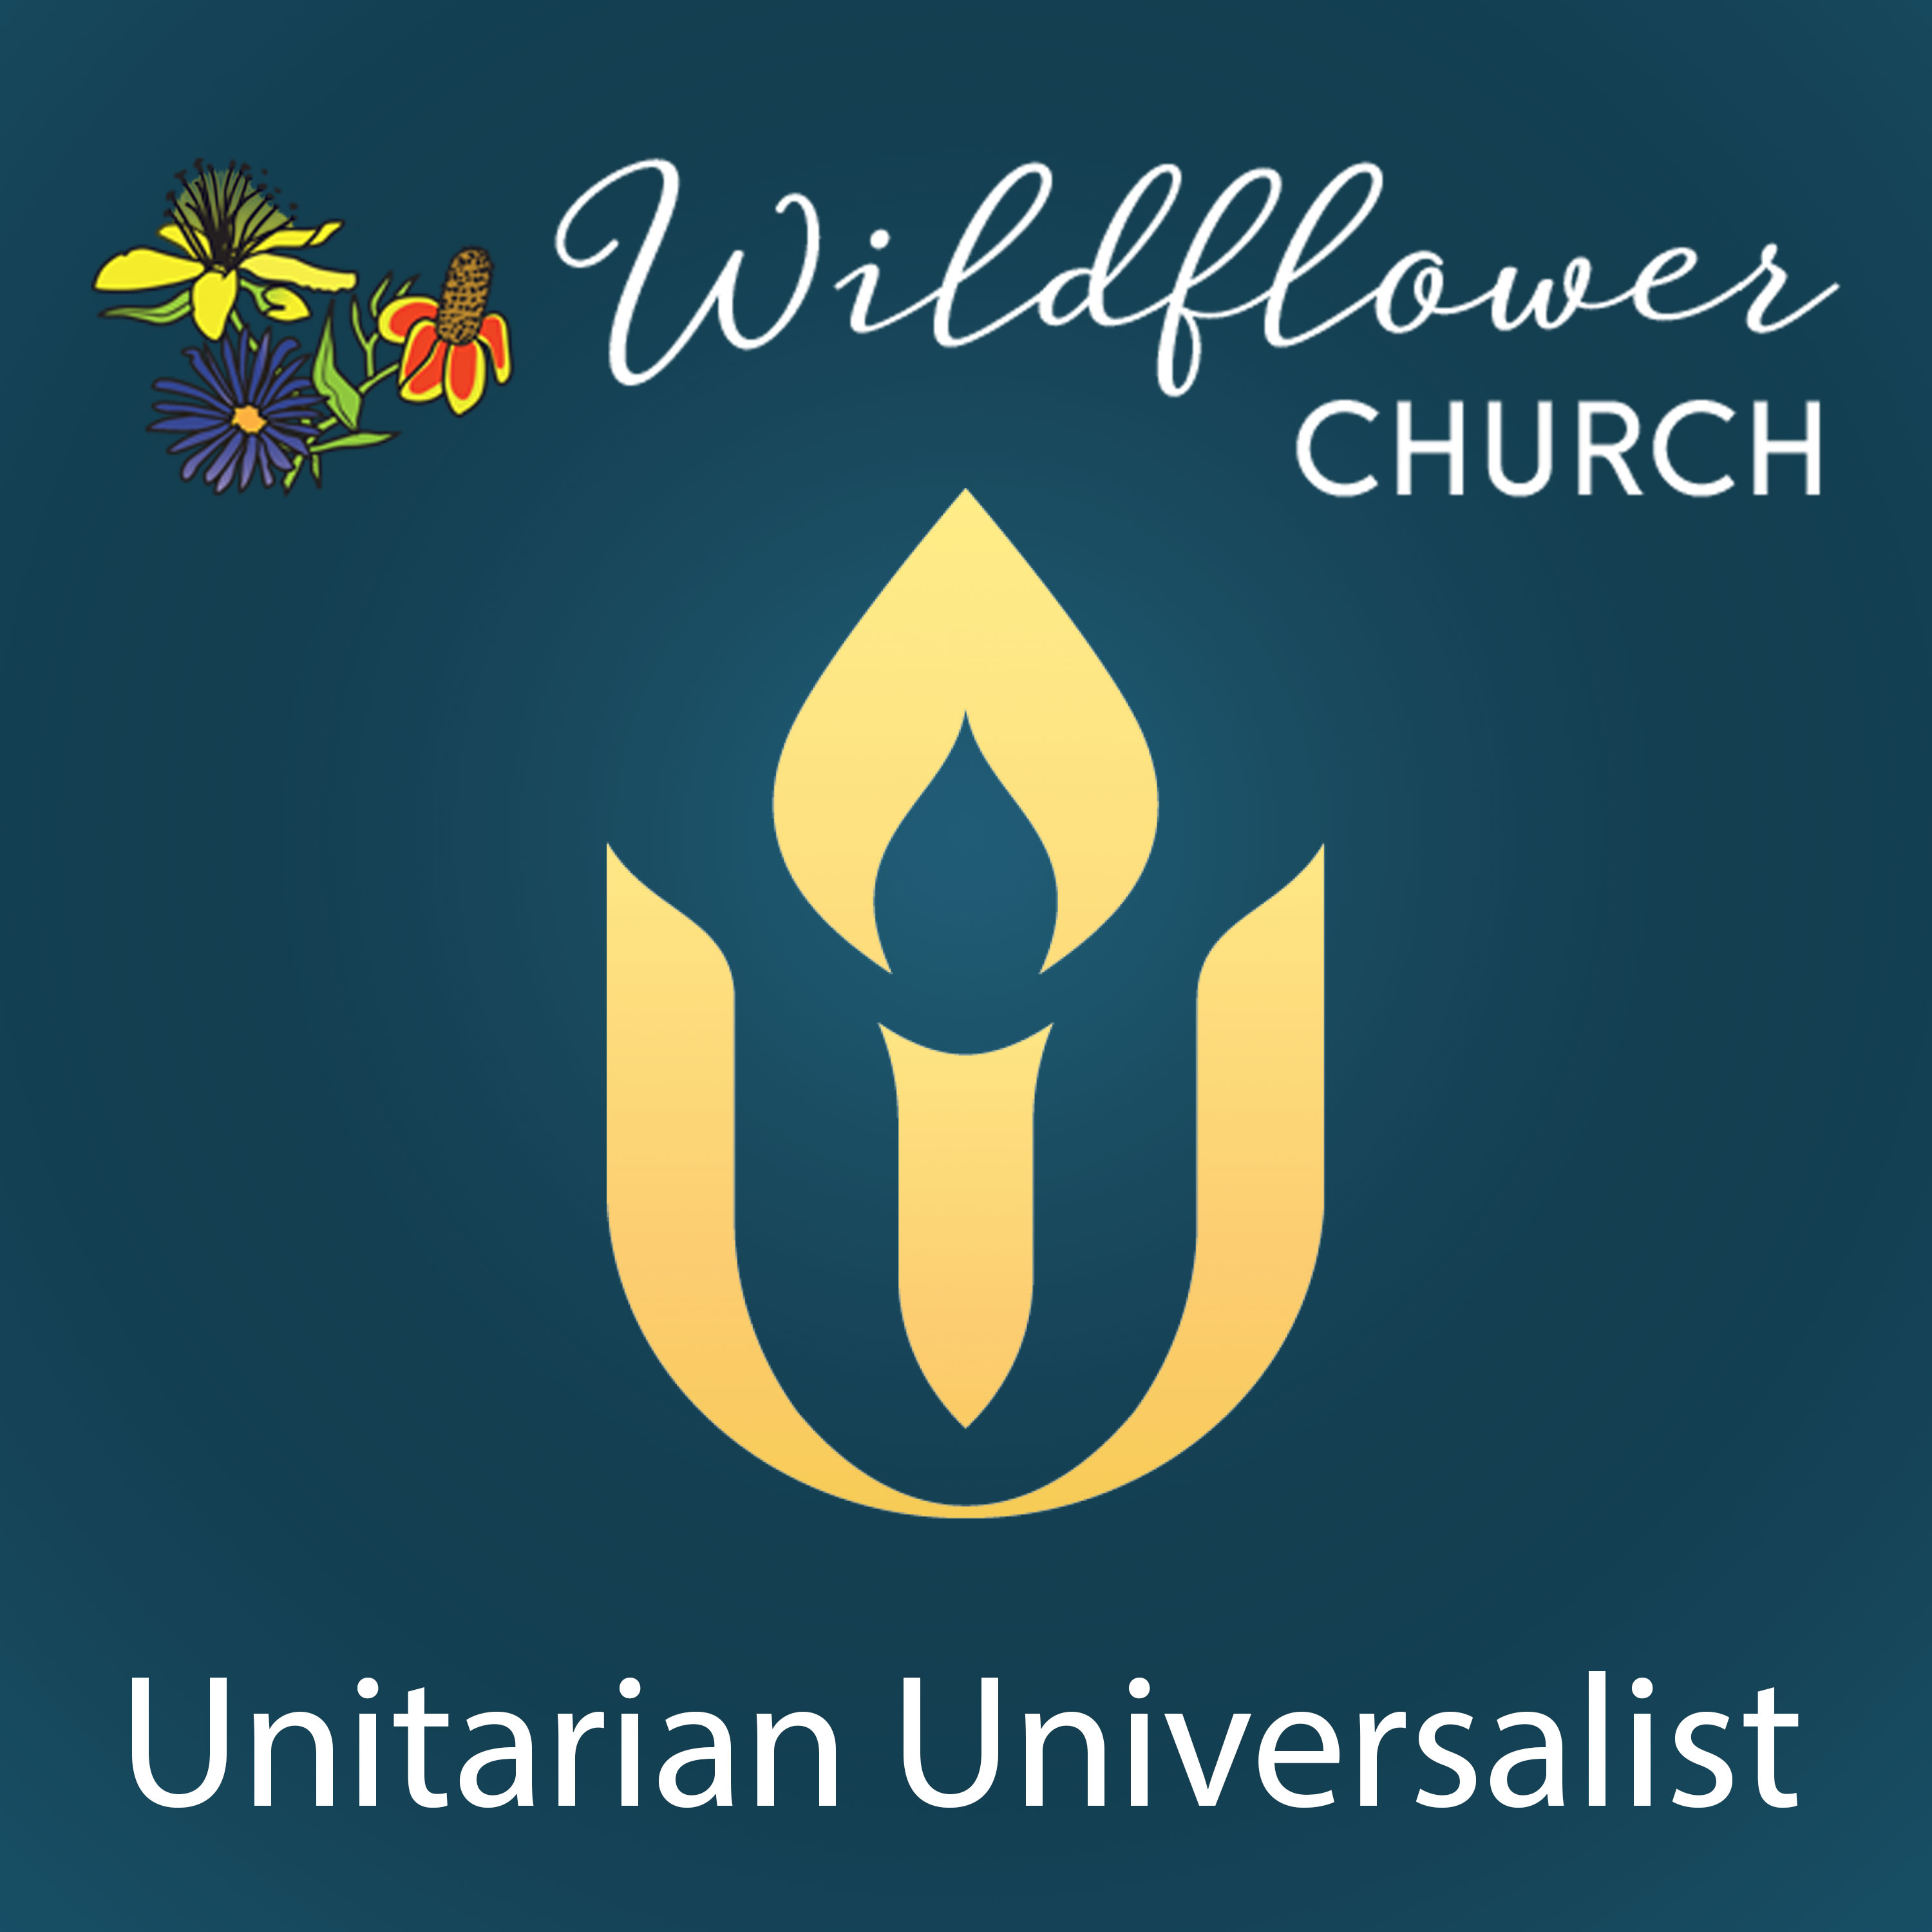 Articulating Our Unitarian Universalist Faith